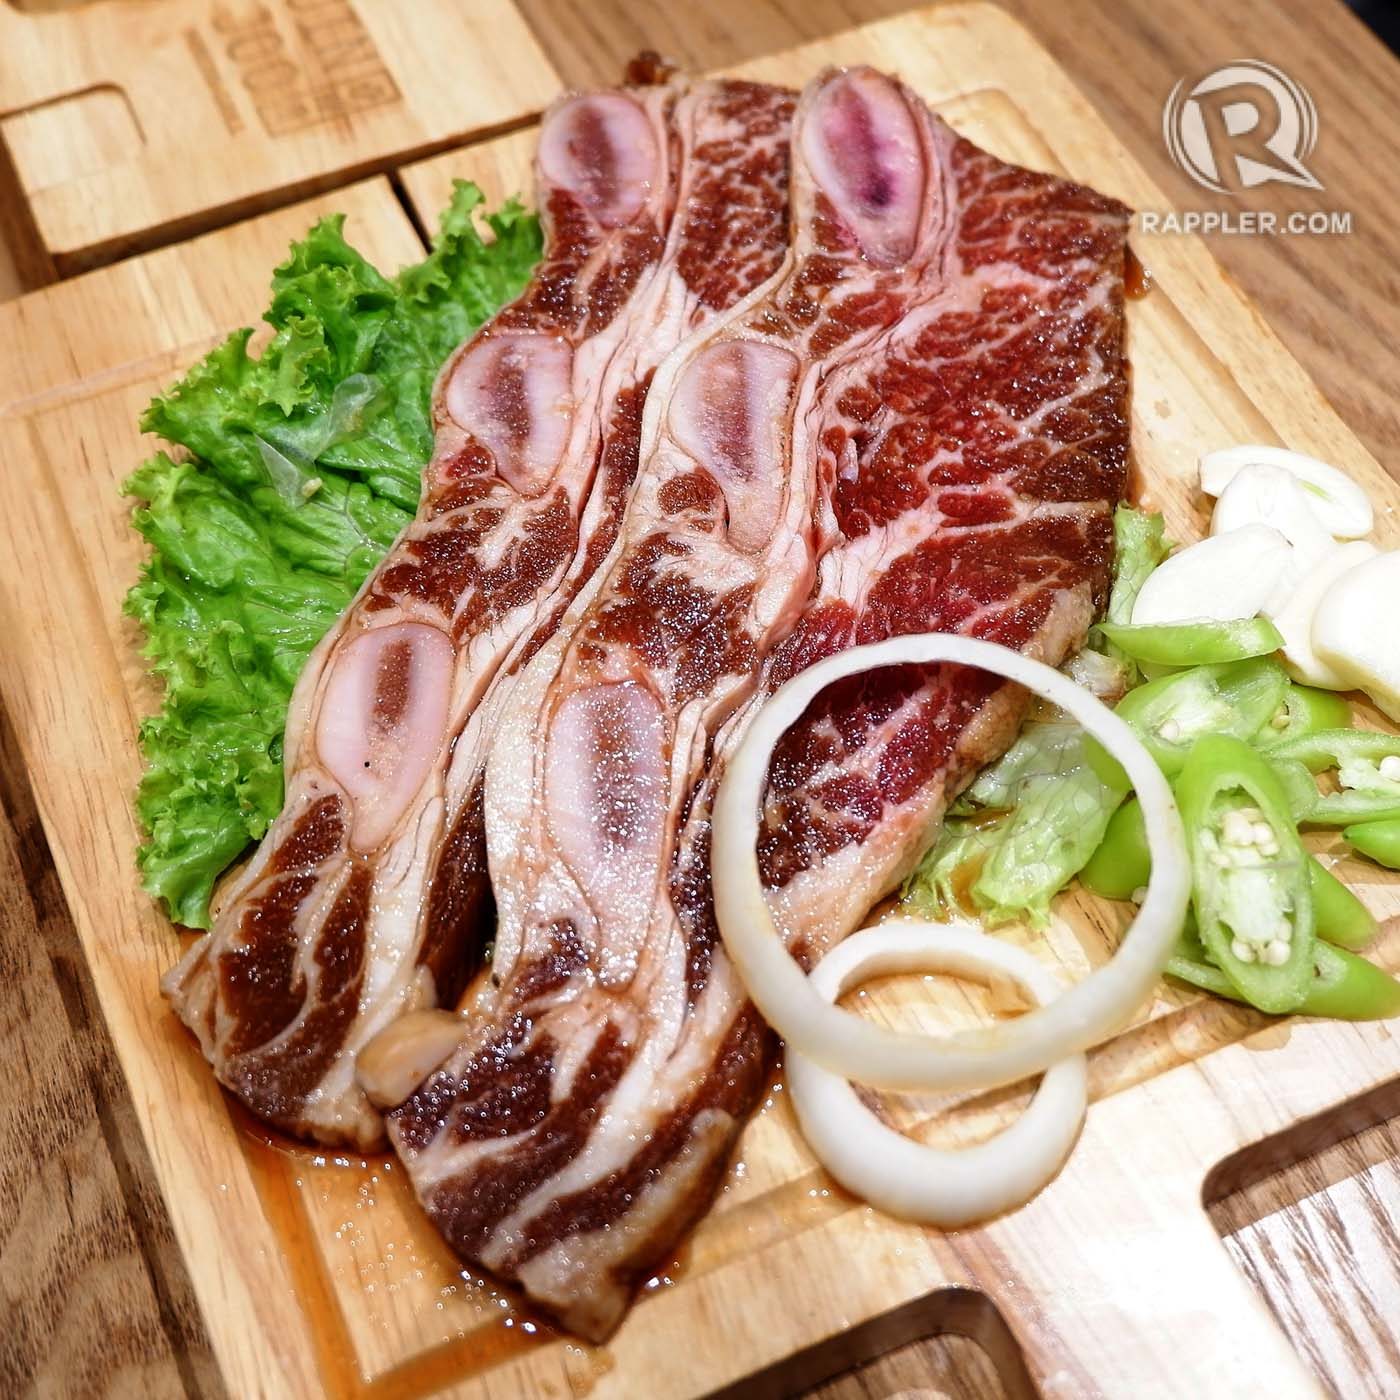 FOR THE PINOY PALATE. JinJoo’s dwaeji galbi, aka pork ribs, are marinated to cater to Filipino tastes. 